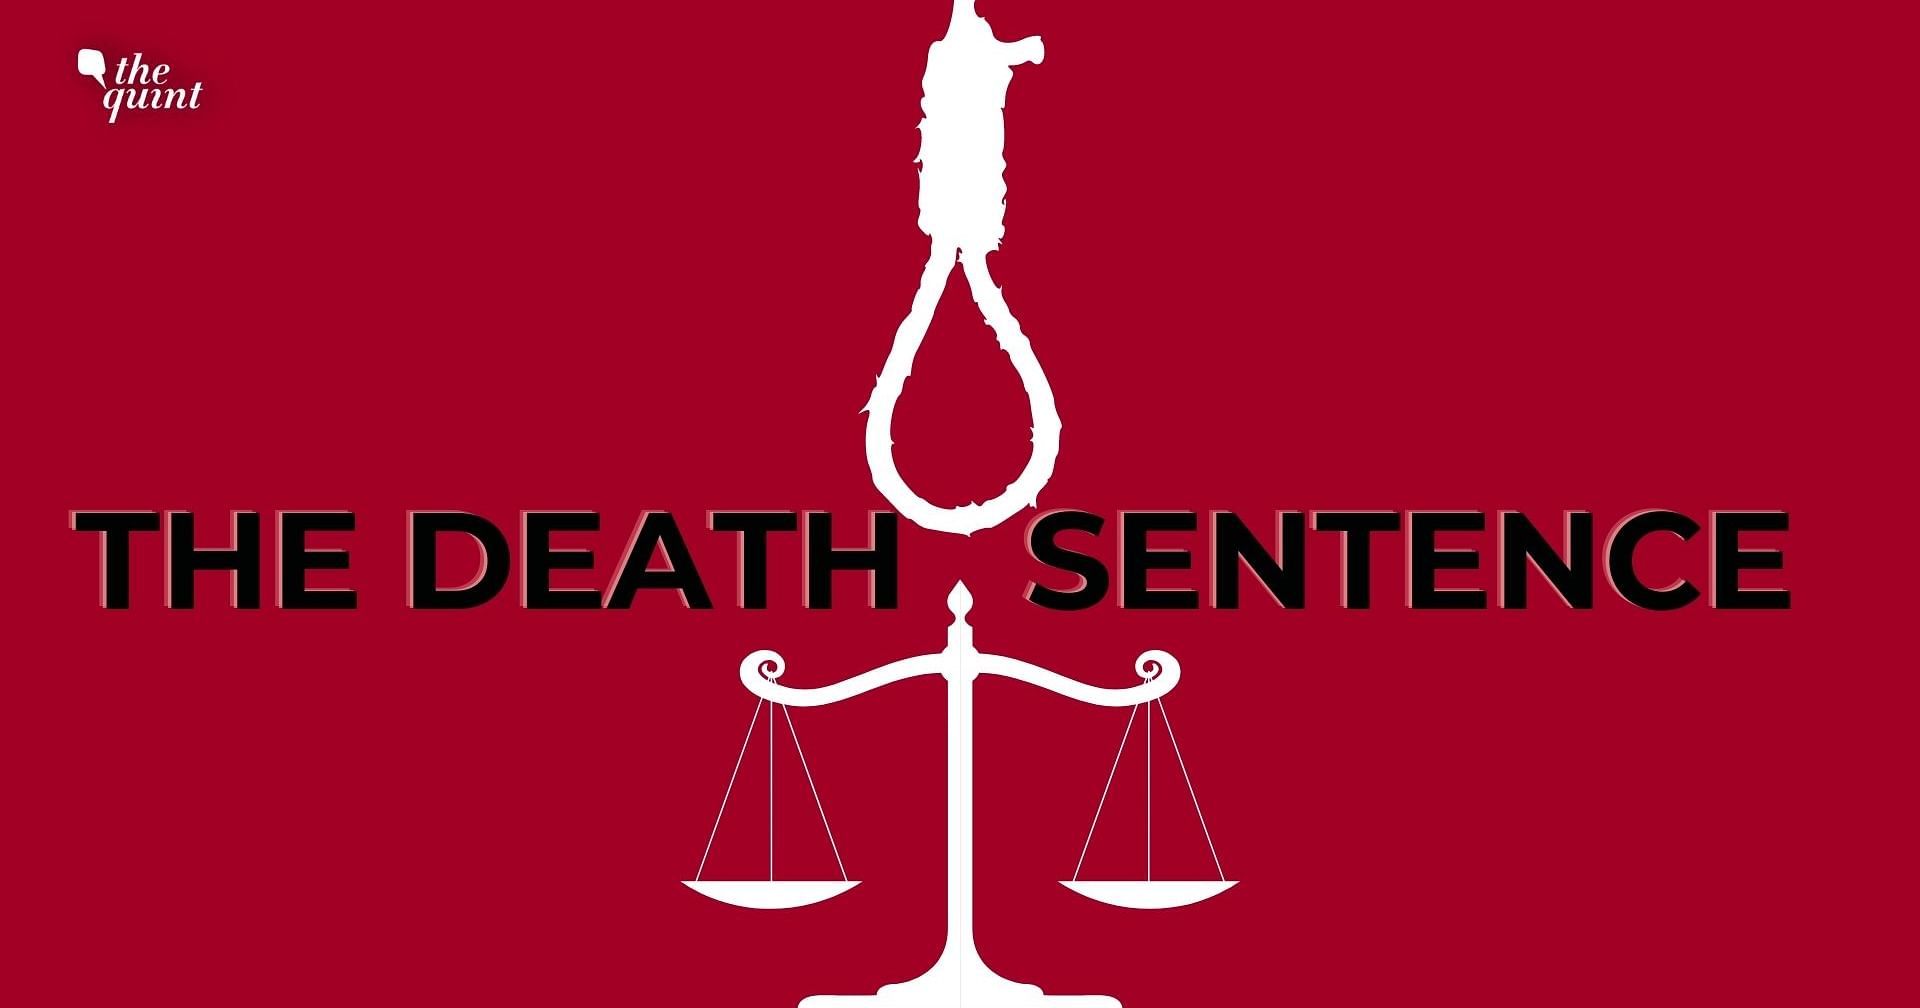 5 Death Sentence, STORY